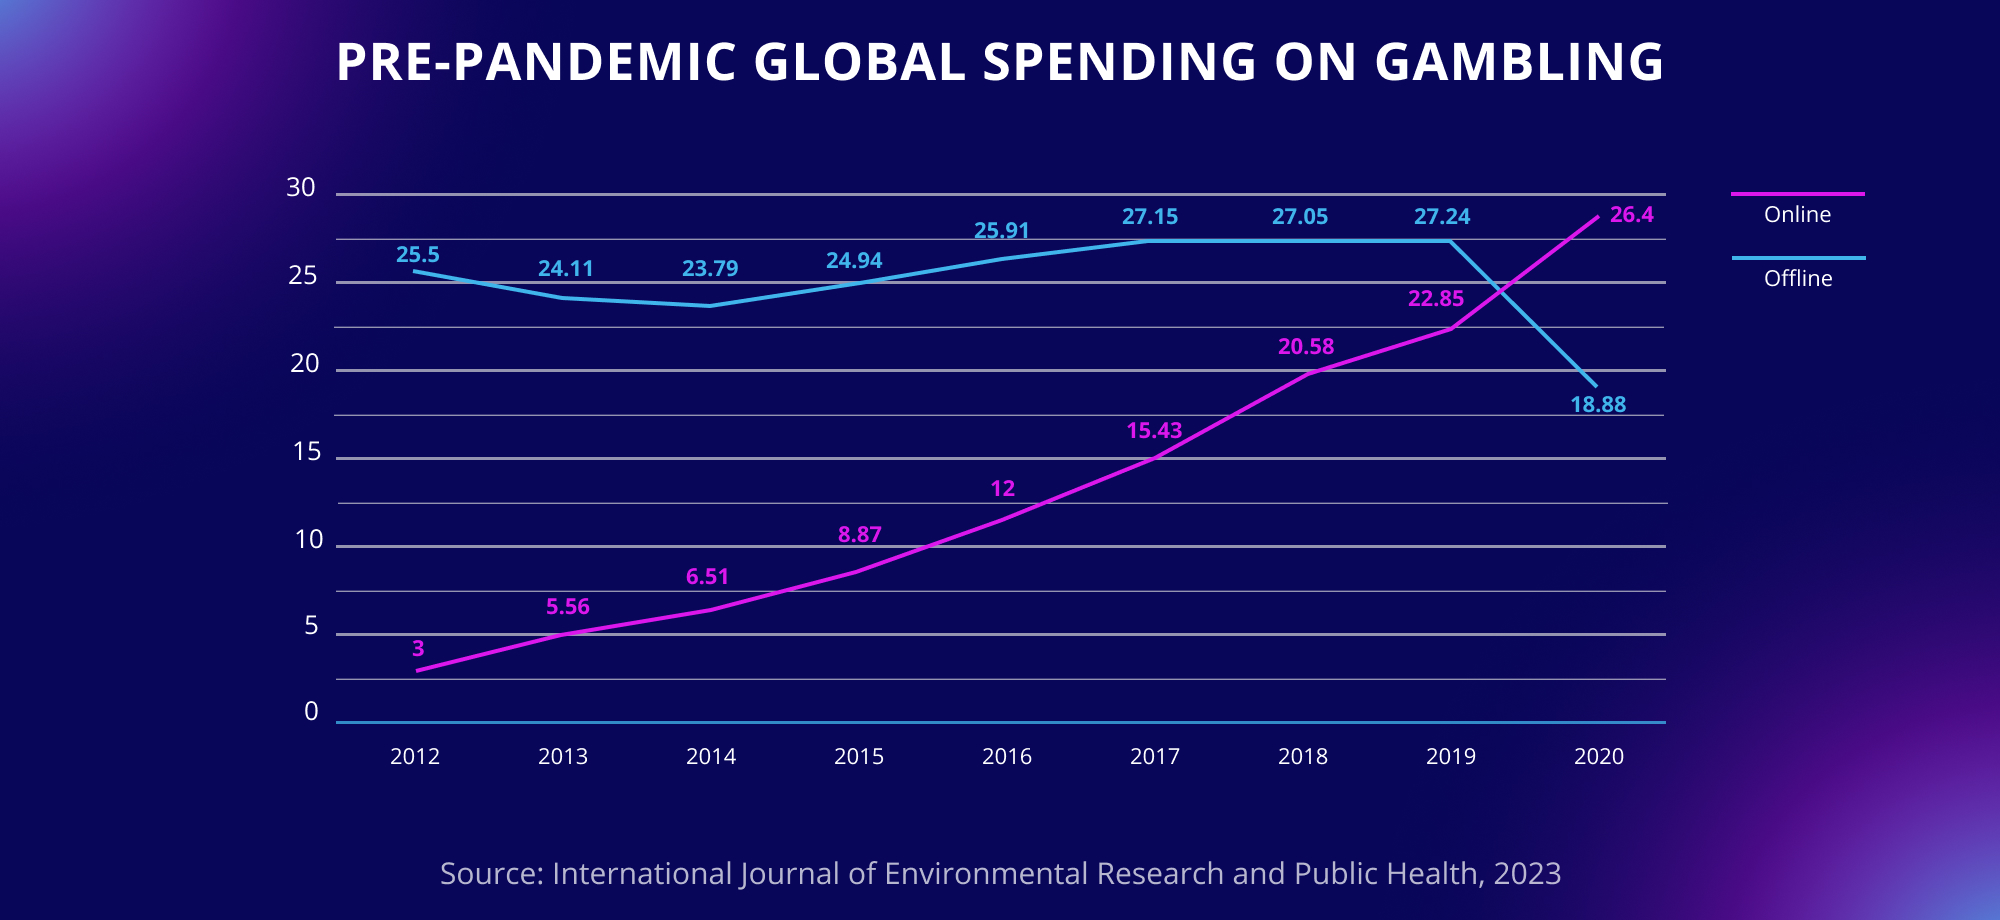 Pre-pandemic global spending on gambling